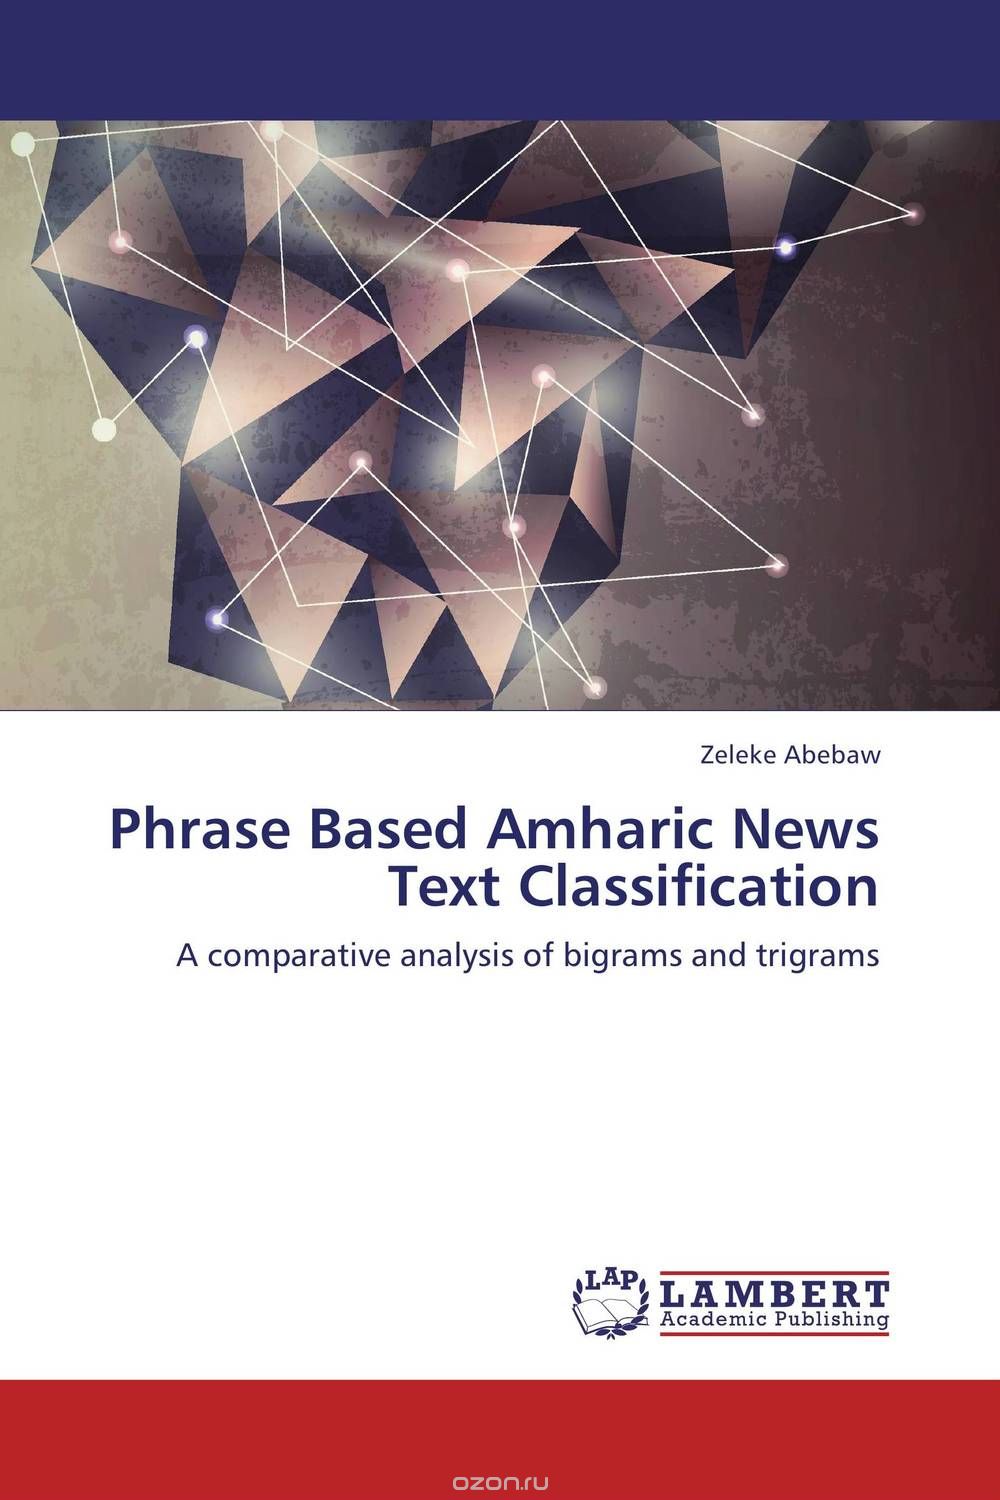 Скачать книгу "Phrase Based Amharic News Text Classification"